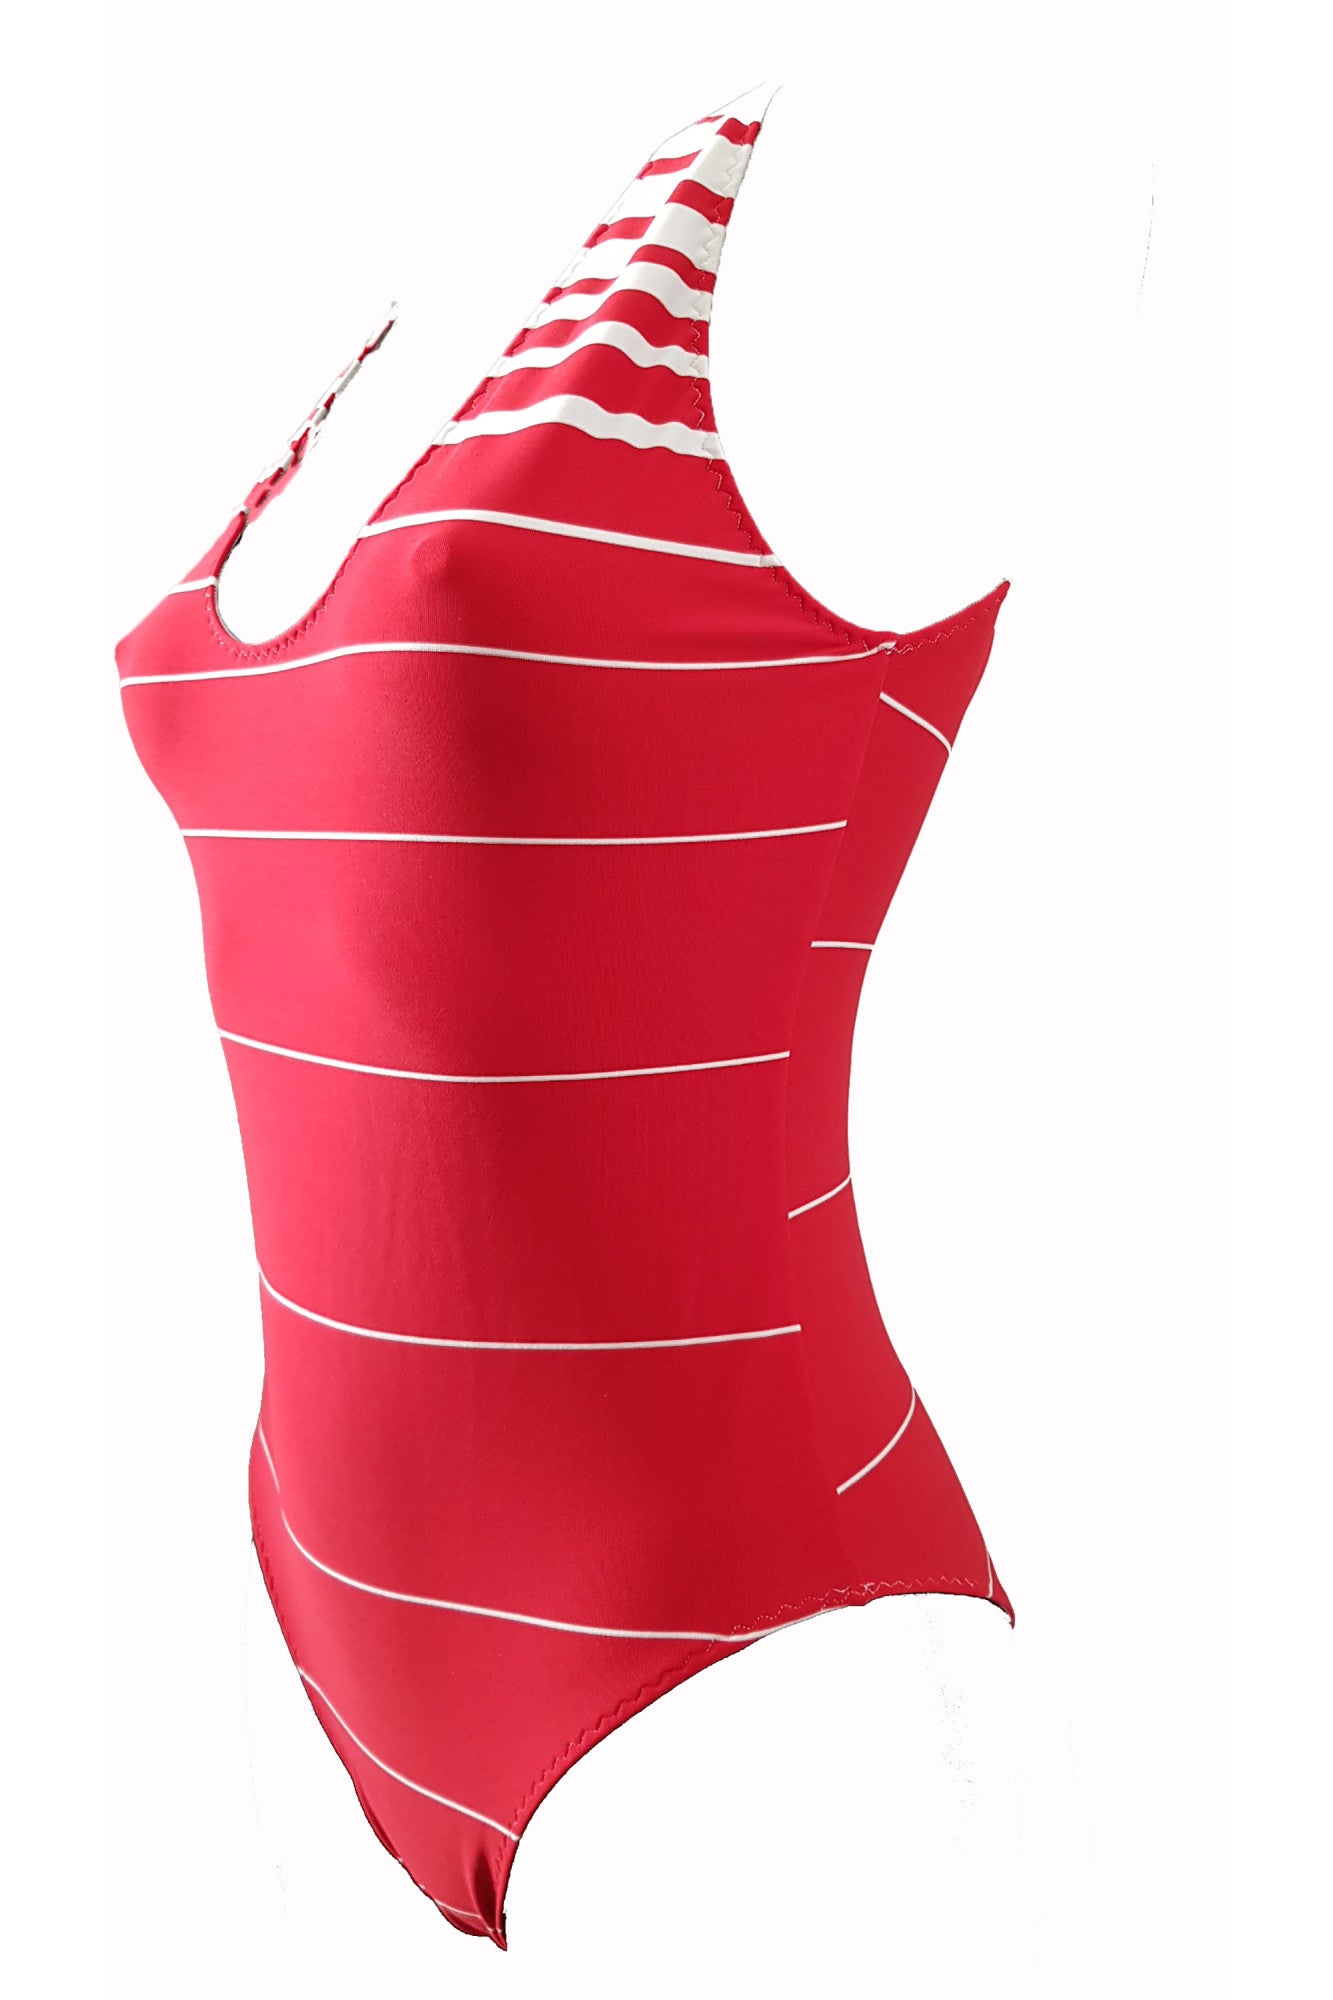 Costum de baie dama intreg, rosu, ANDREEA 01, BLD by Exclusive